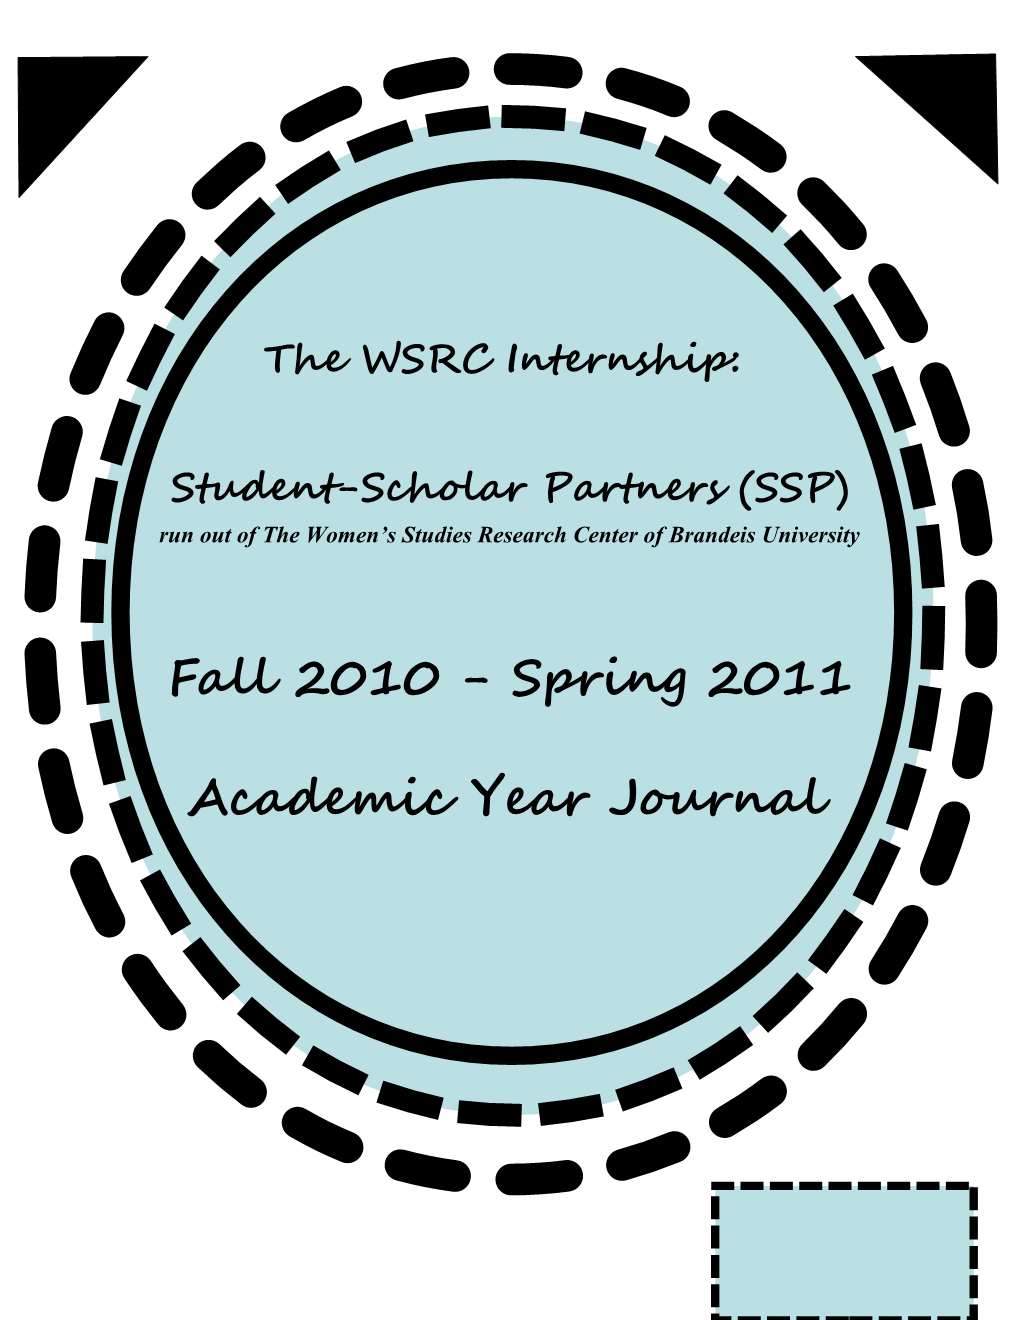 Student-Scholar Partners (SSP)